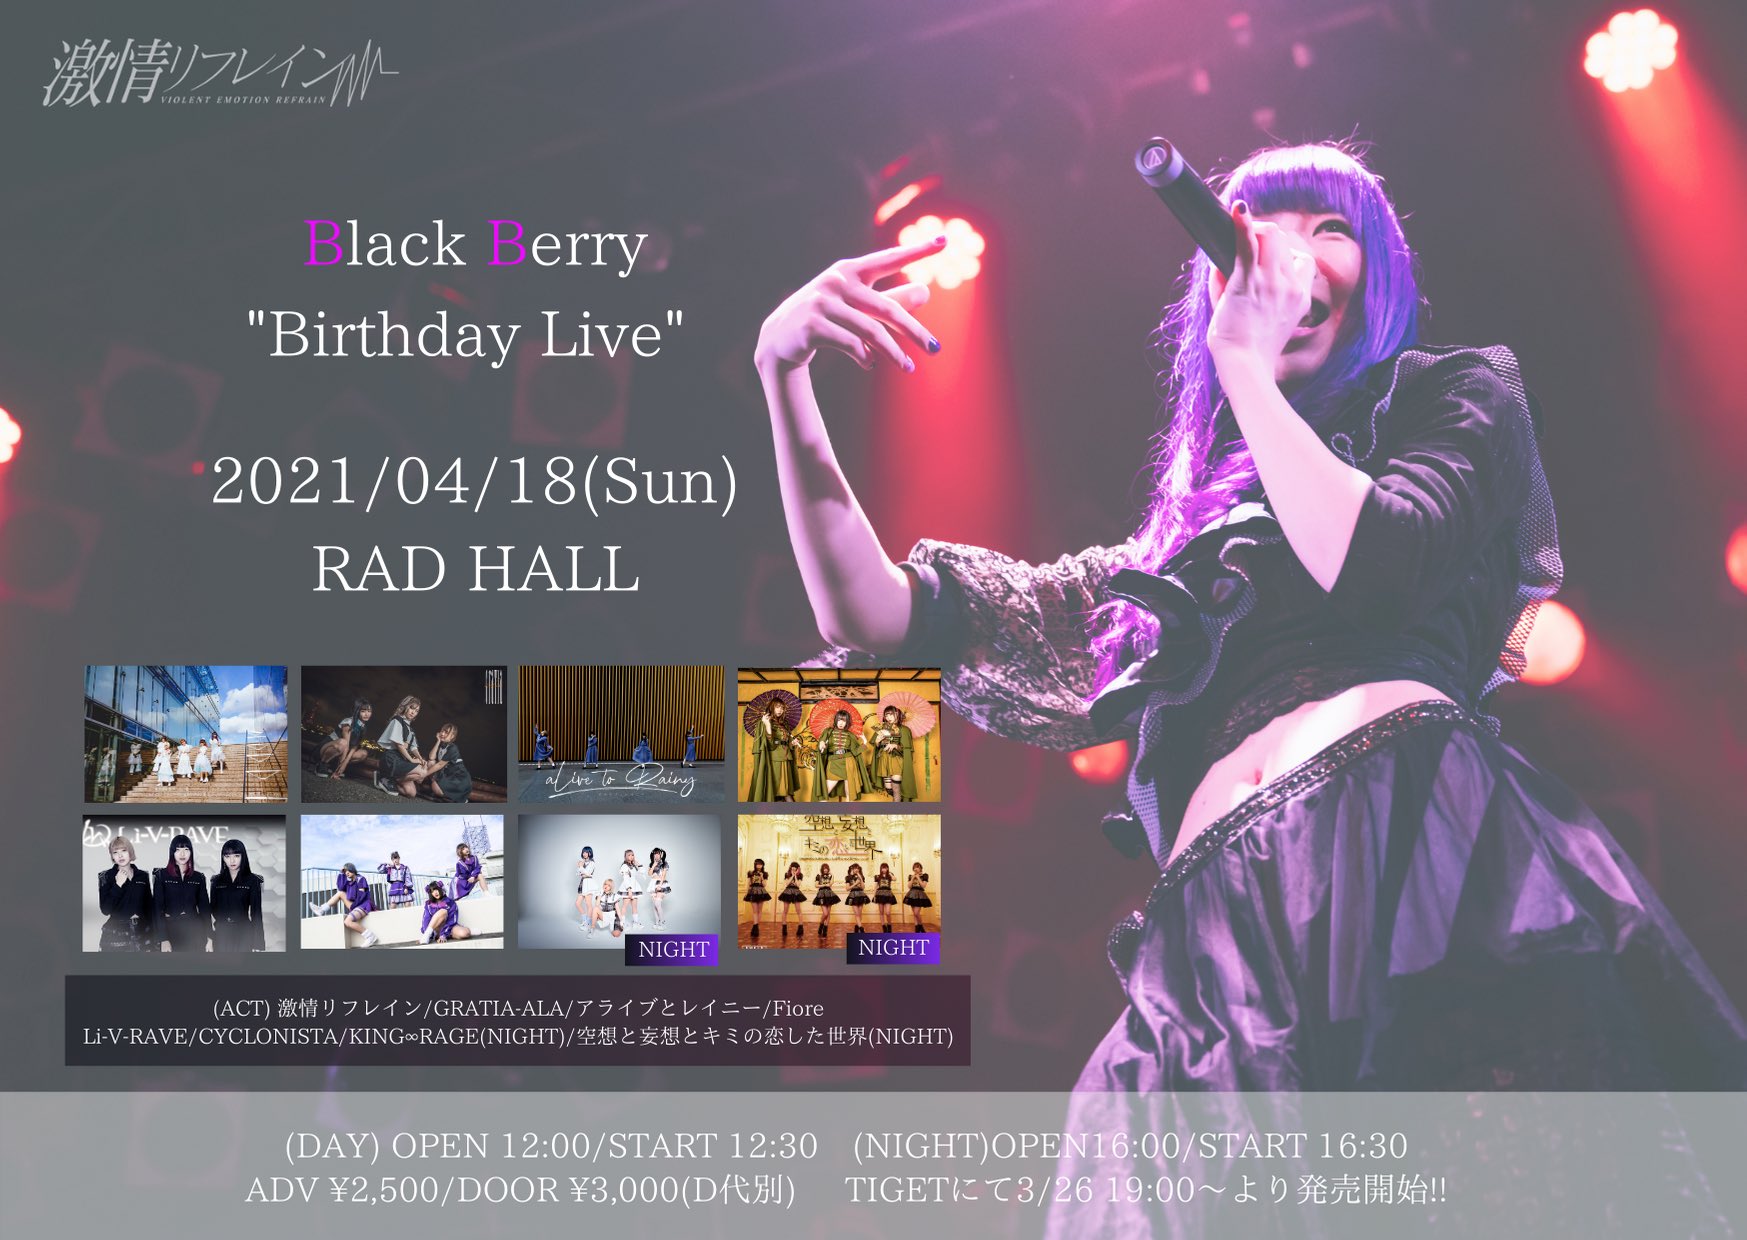 Black Berry "Birthday Live"